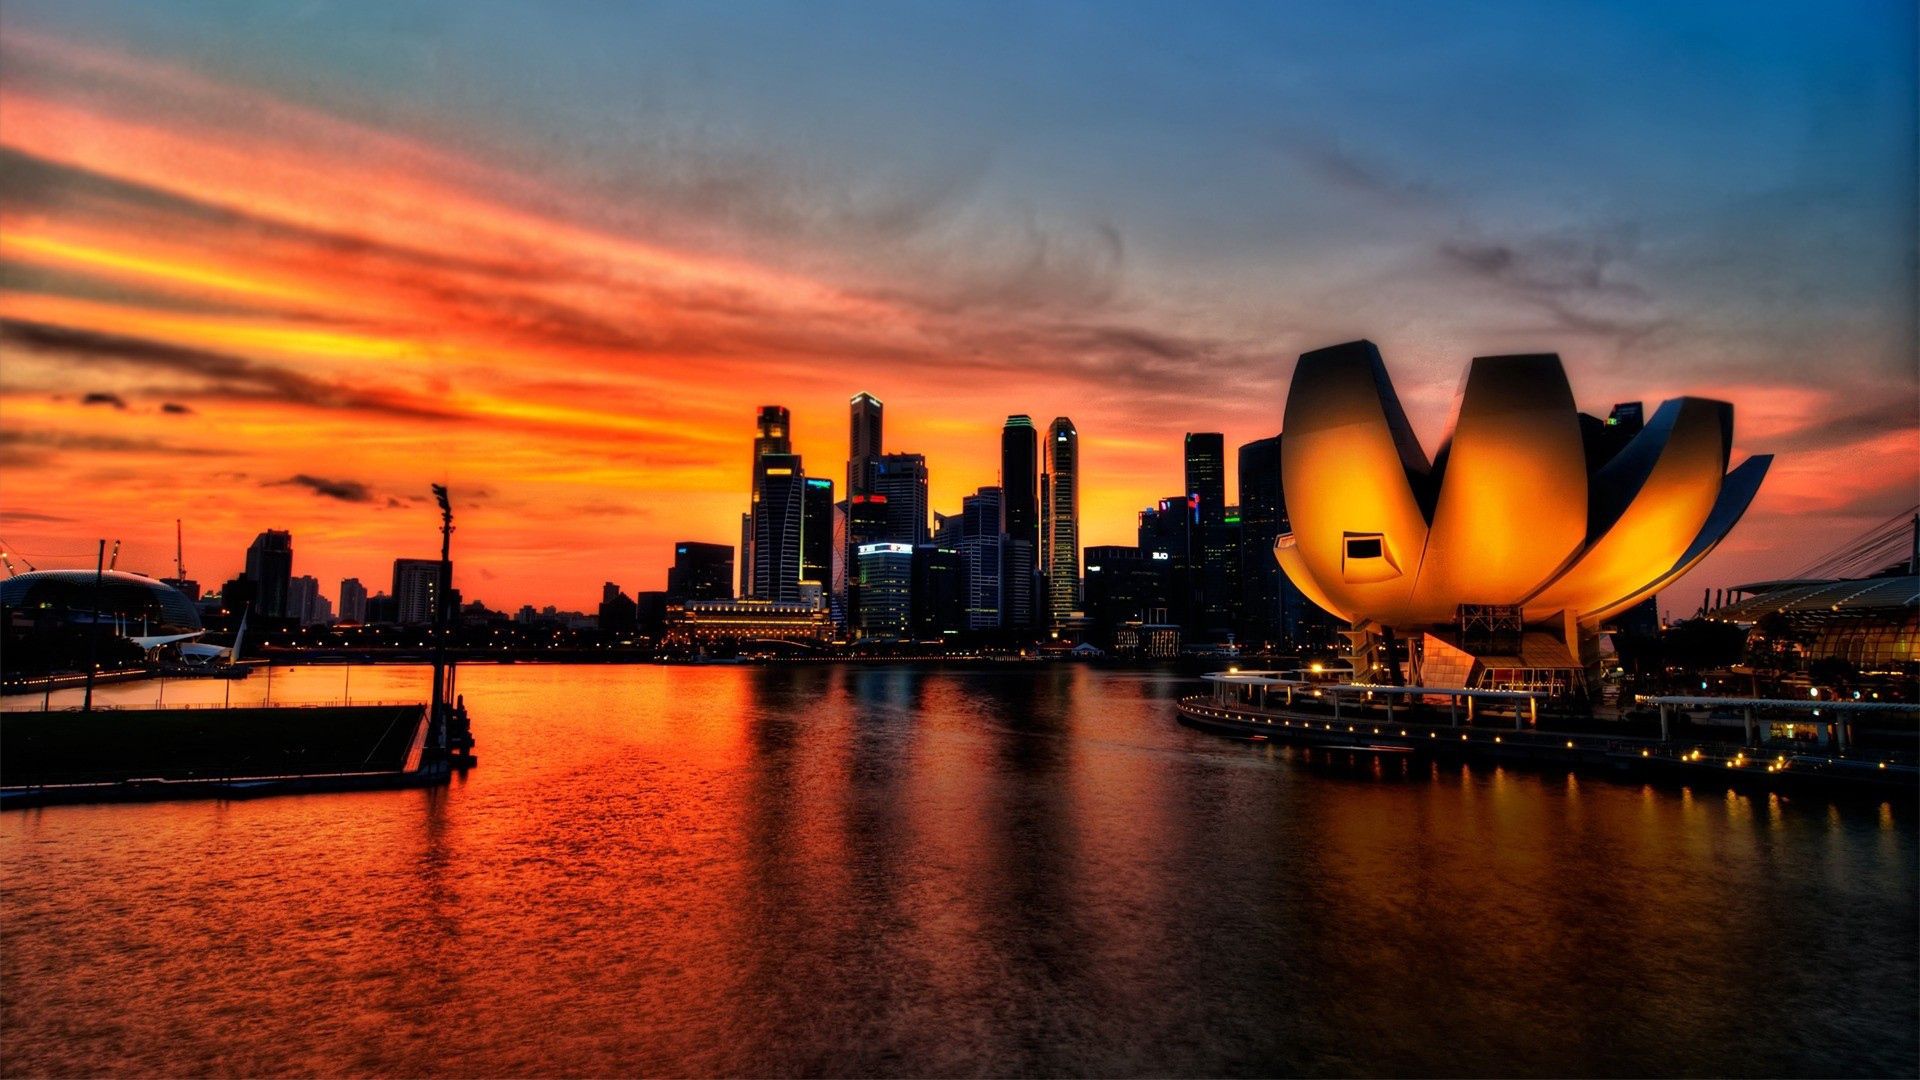 Download wallpaper 1920x1080 singapore, sky, sunset, light hd background